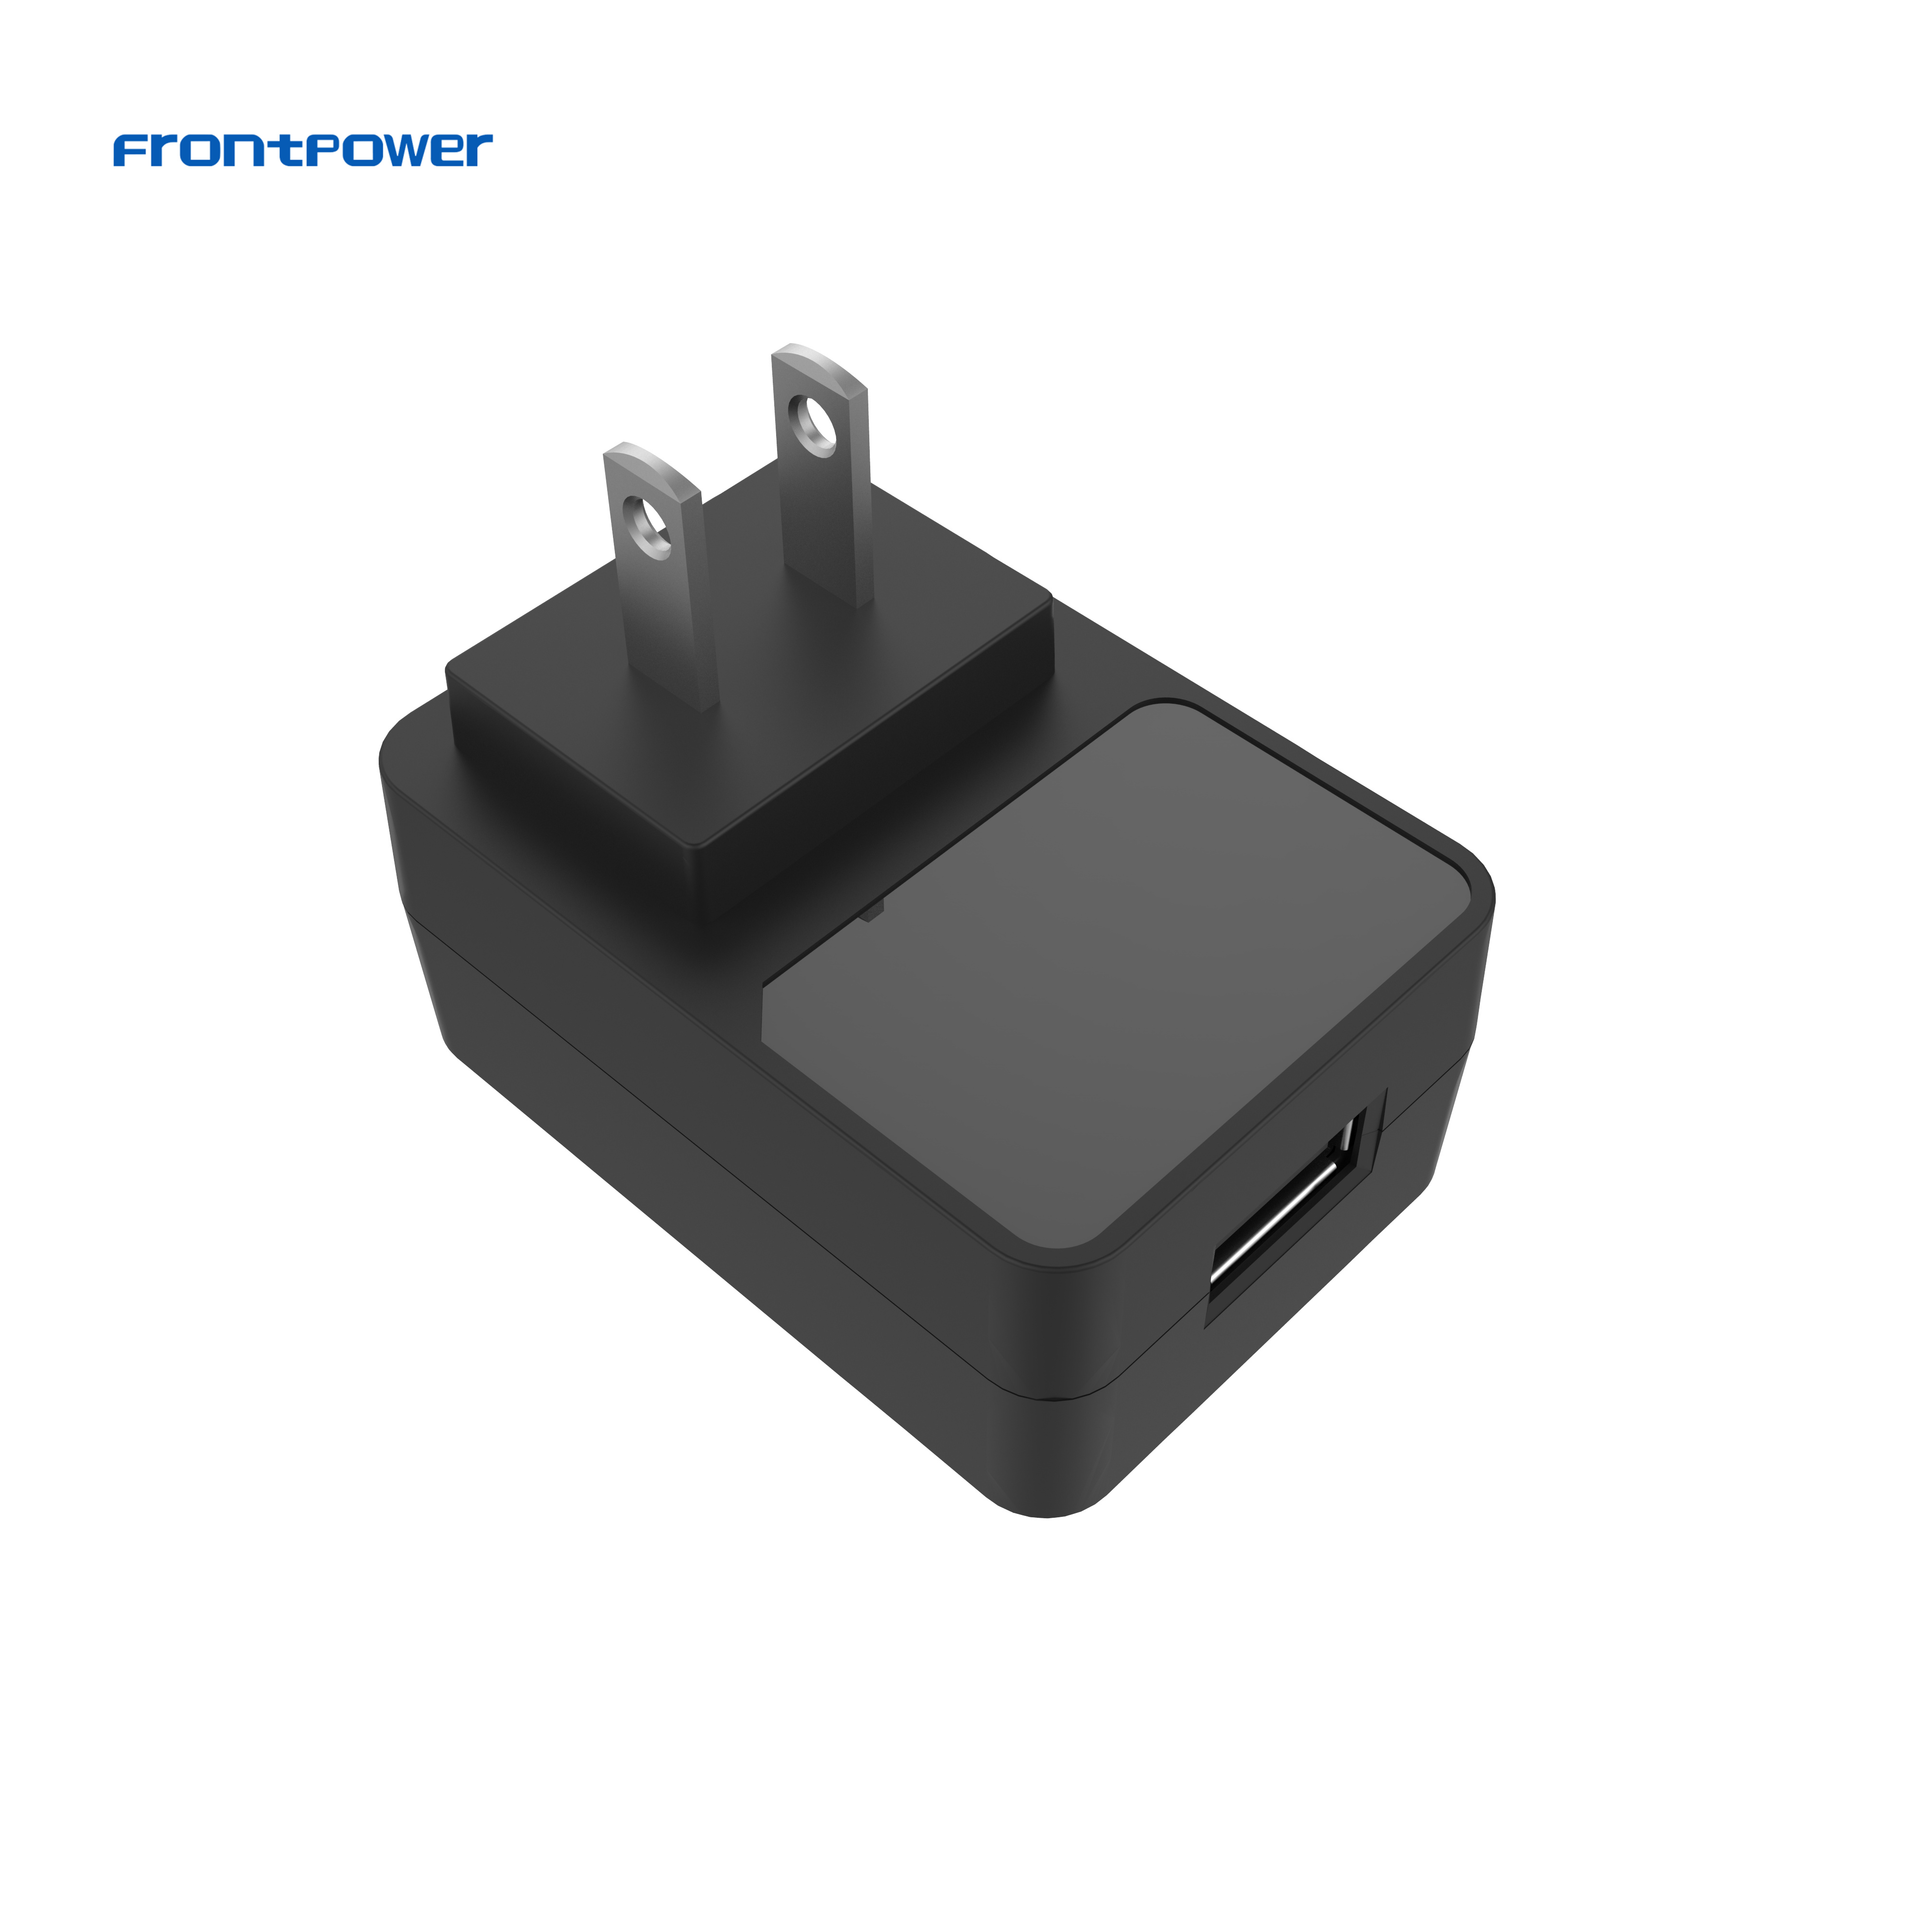 EN62368 EN61558 ETL1310 CB EMC55032 55035 55014 US EU UK AU PSE Plug USB Switching Power Supply Adapter for Display Player LED